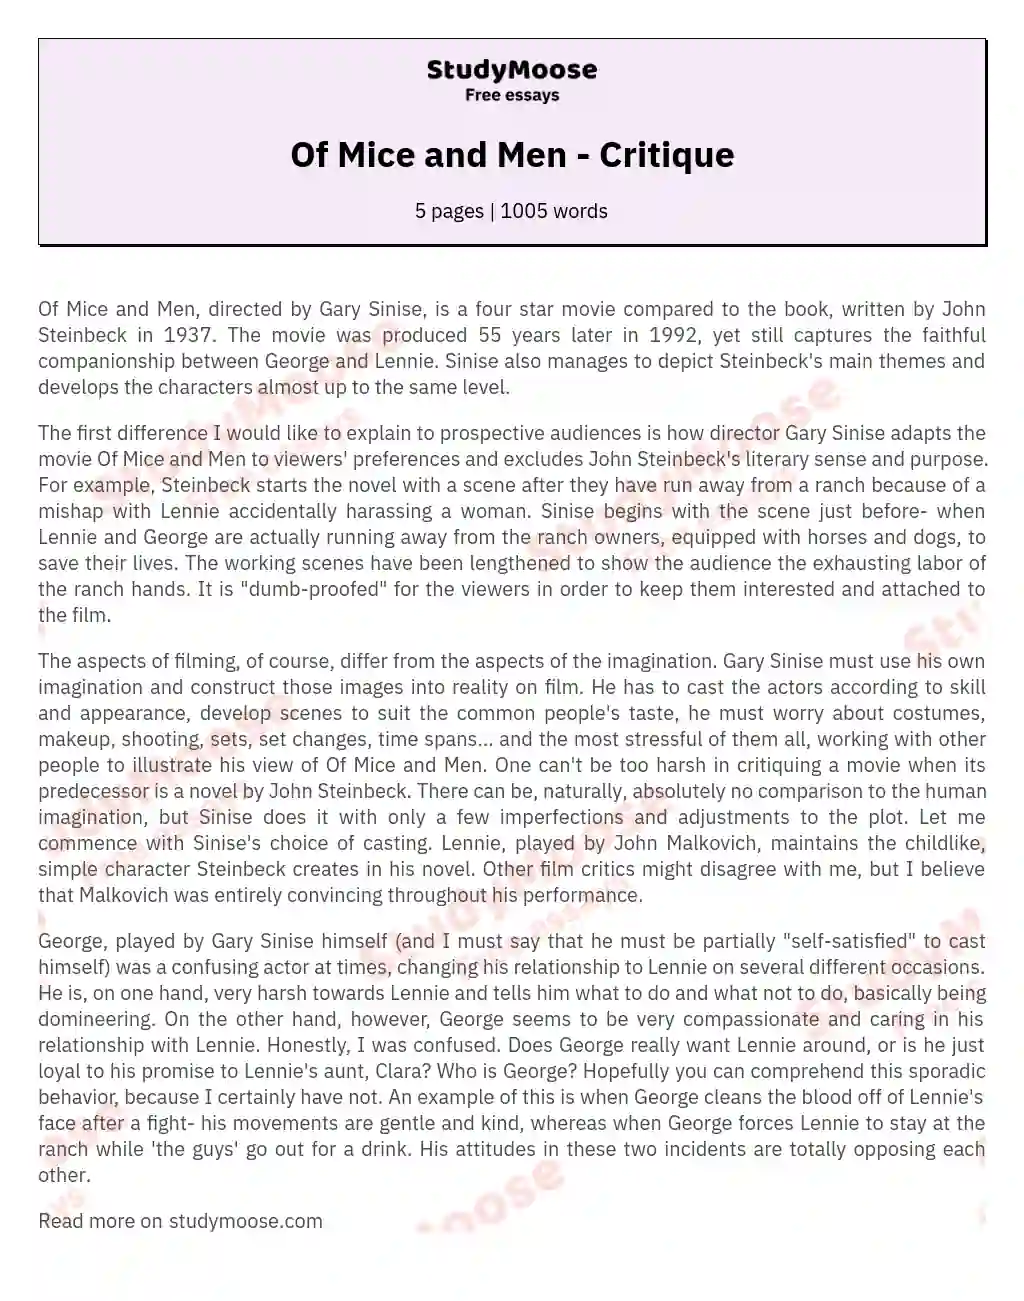 Of Mice and Men - Critique essay